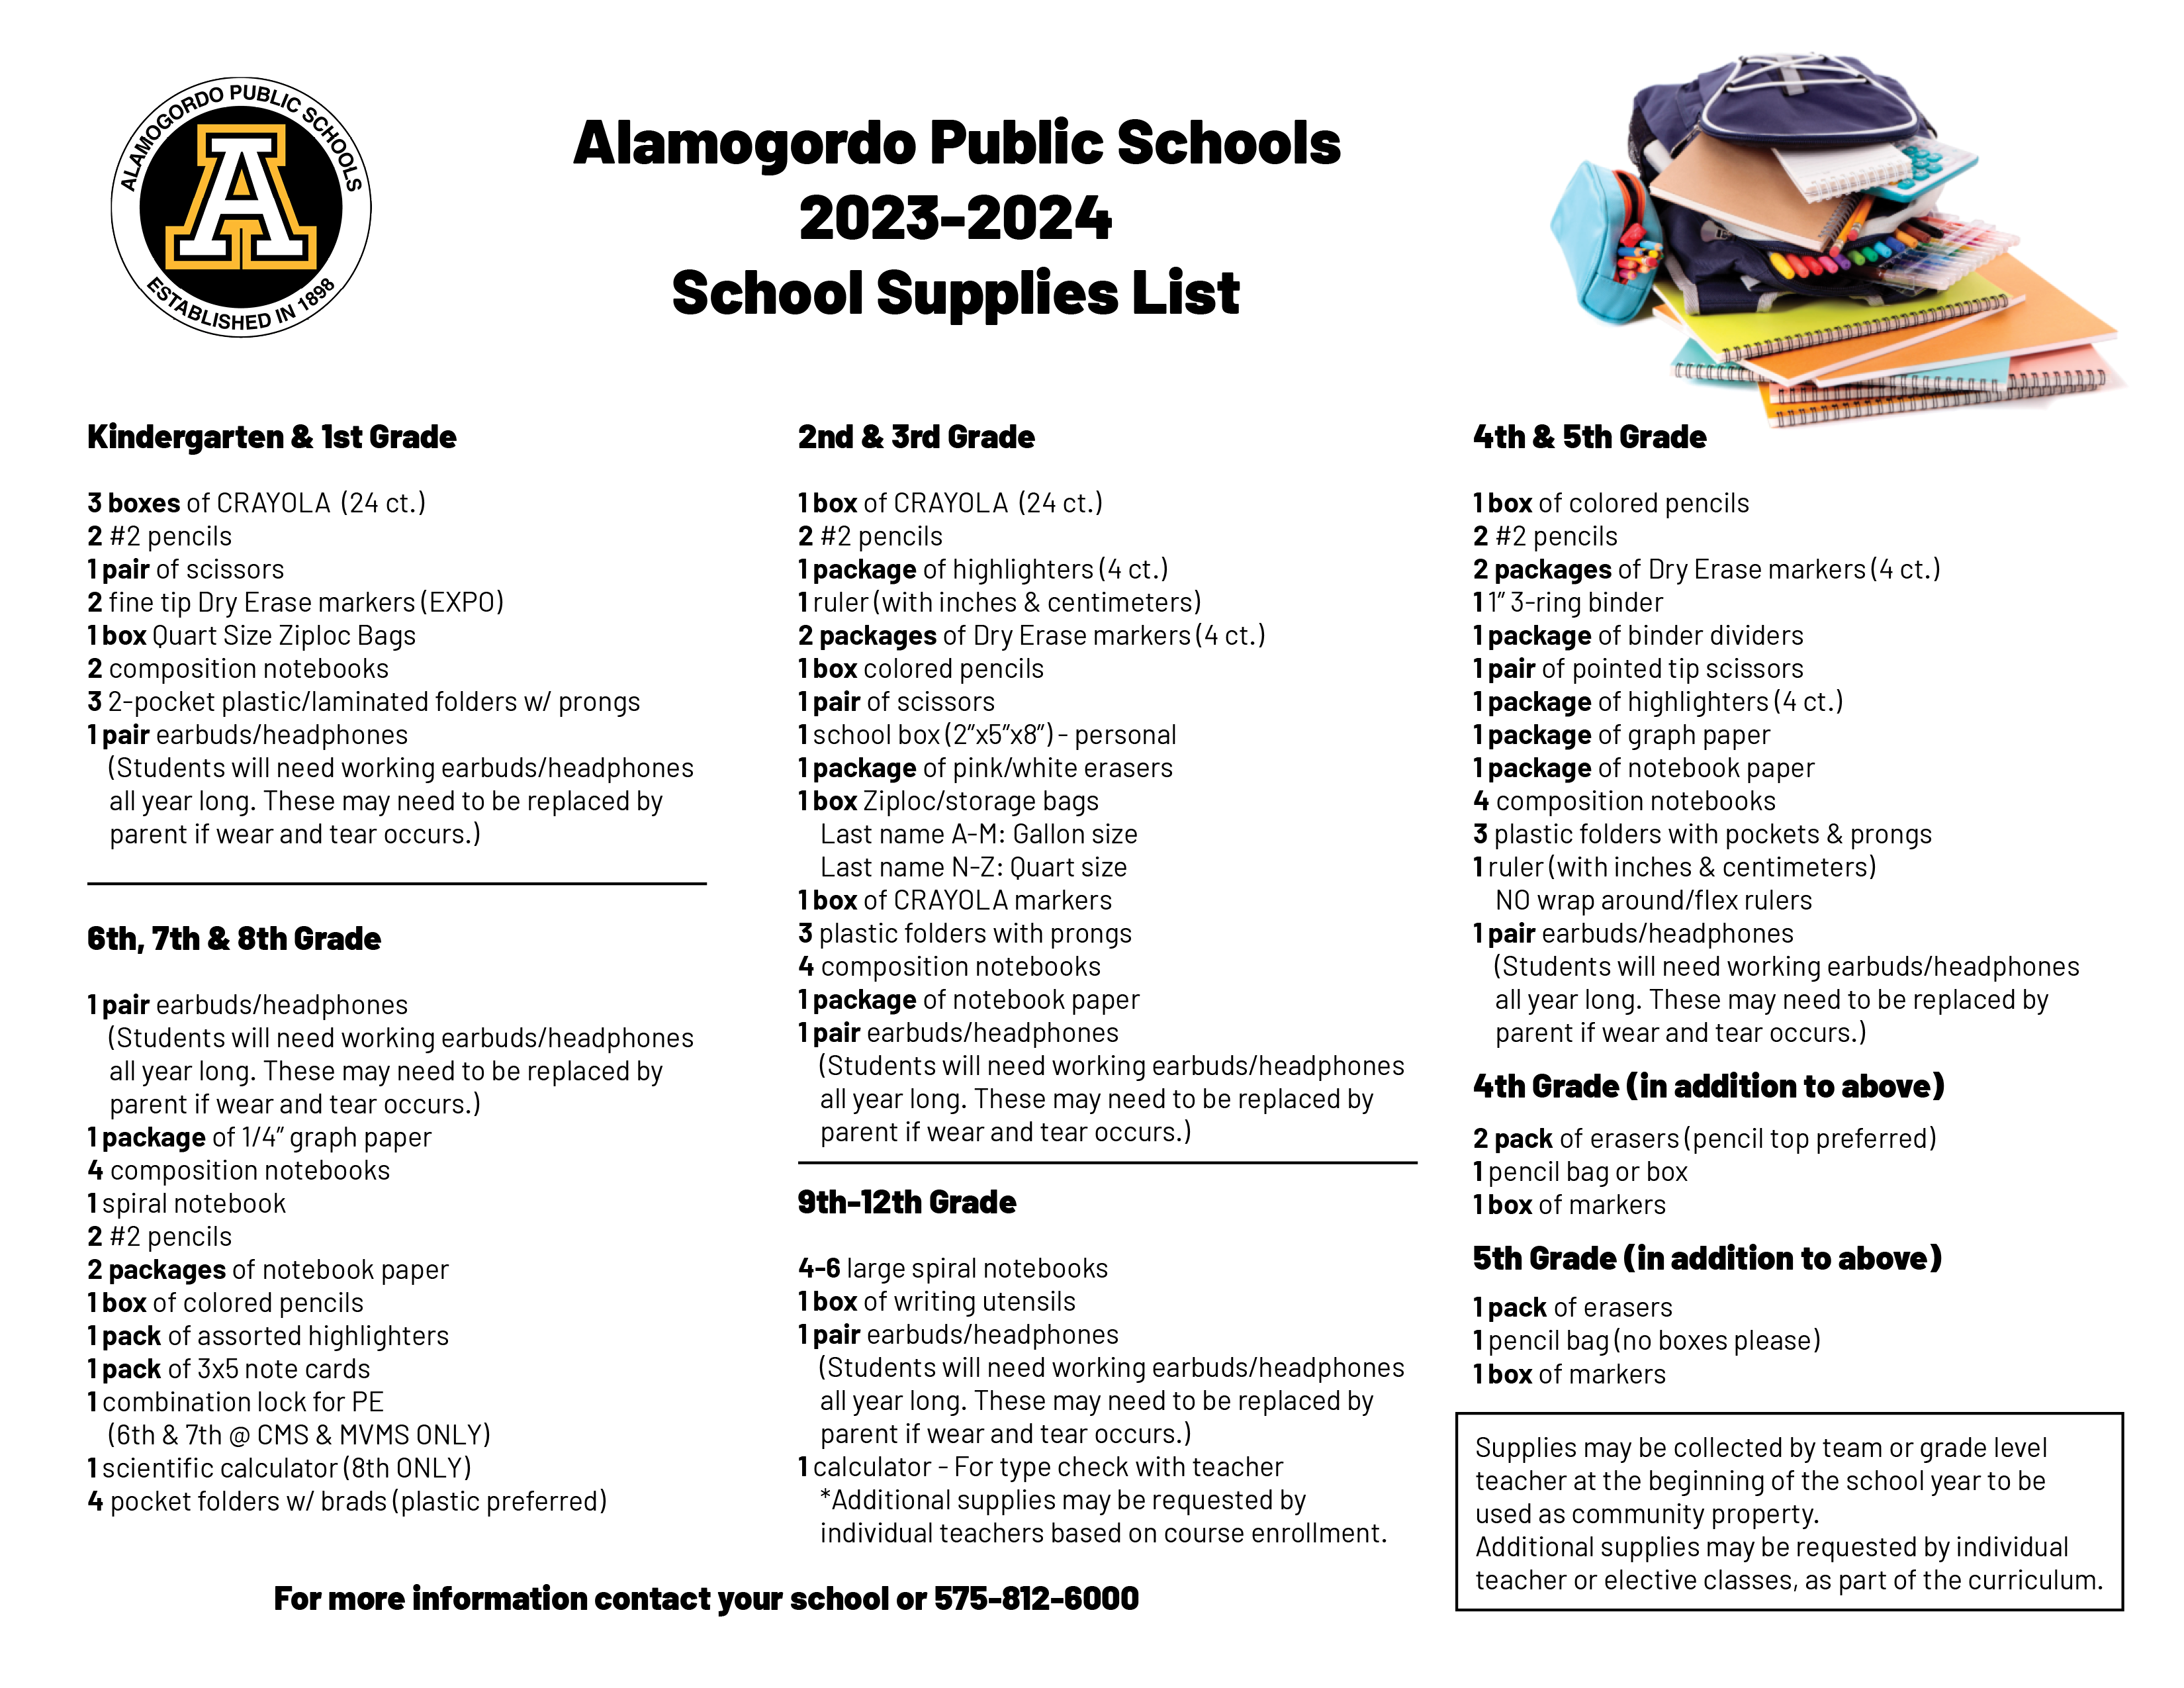 https://www.alamogordoschools.org/core/fileparse.php/4205/urlt/2023-School-Supplies-List.png